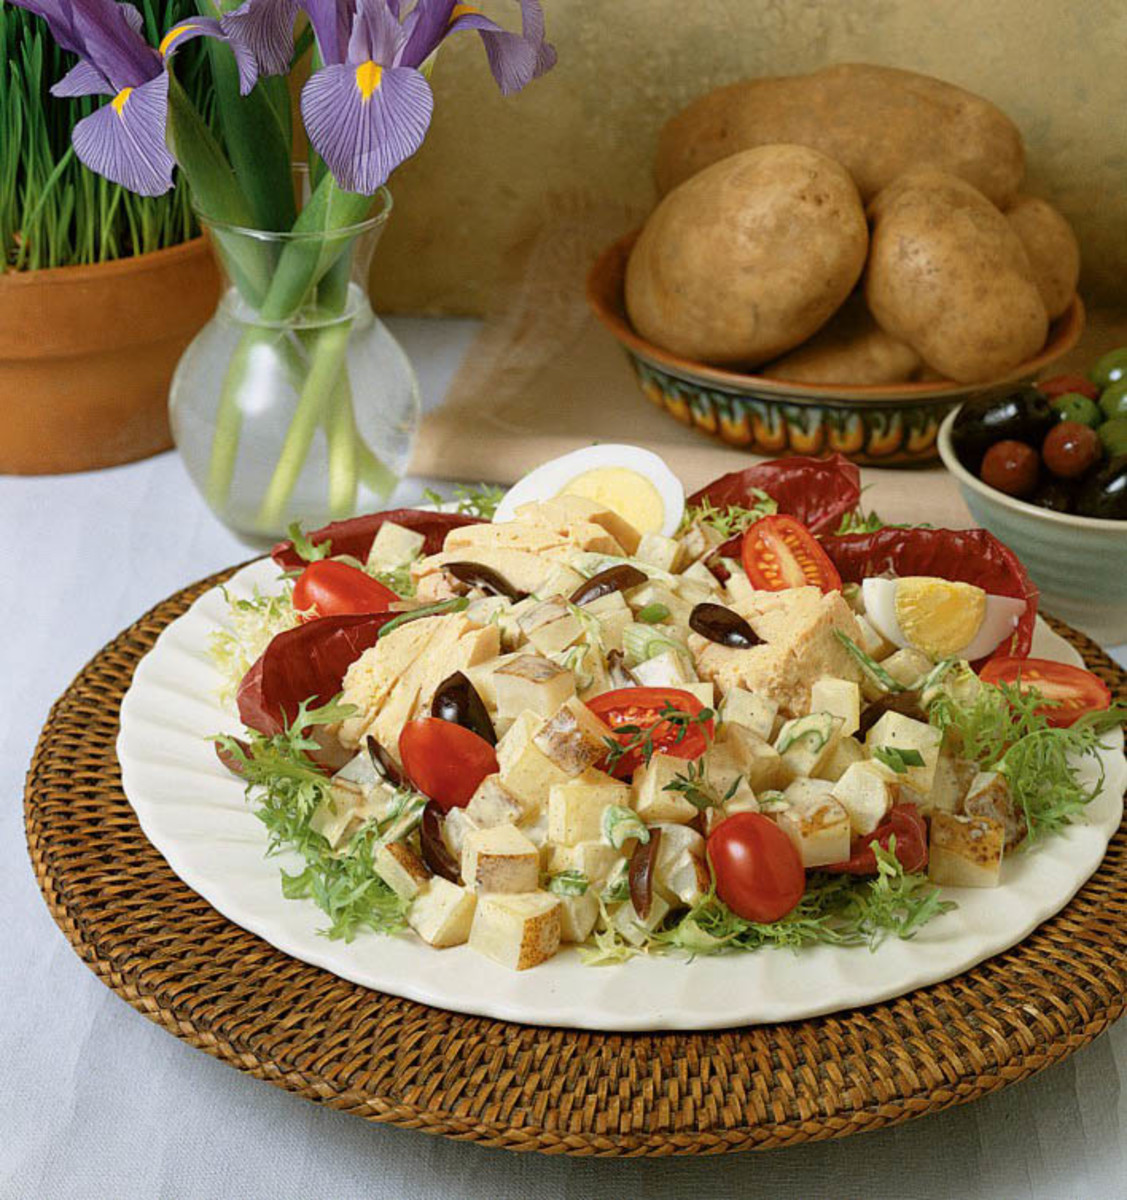 Idaho potato nicoise salad